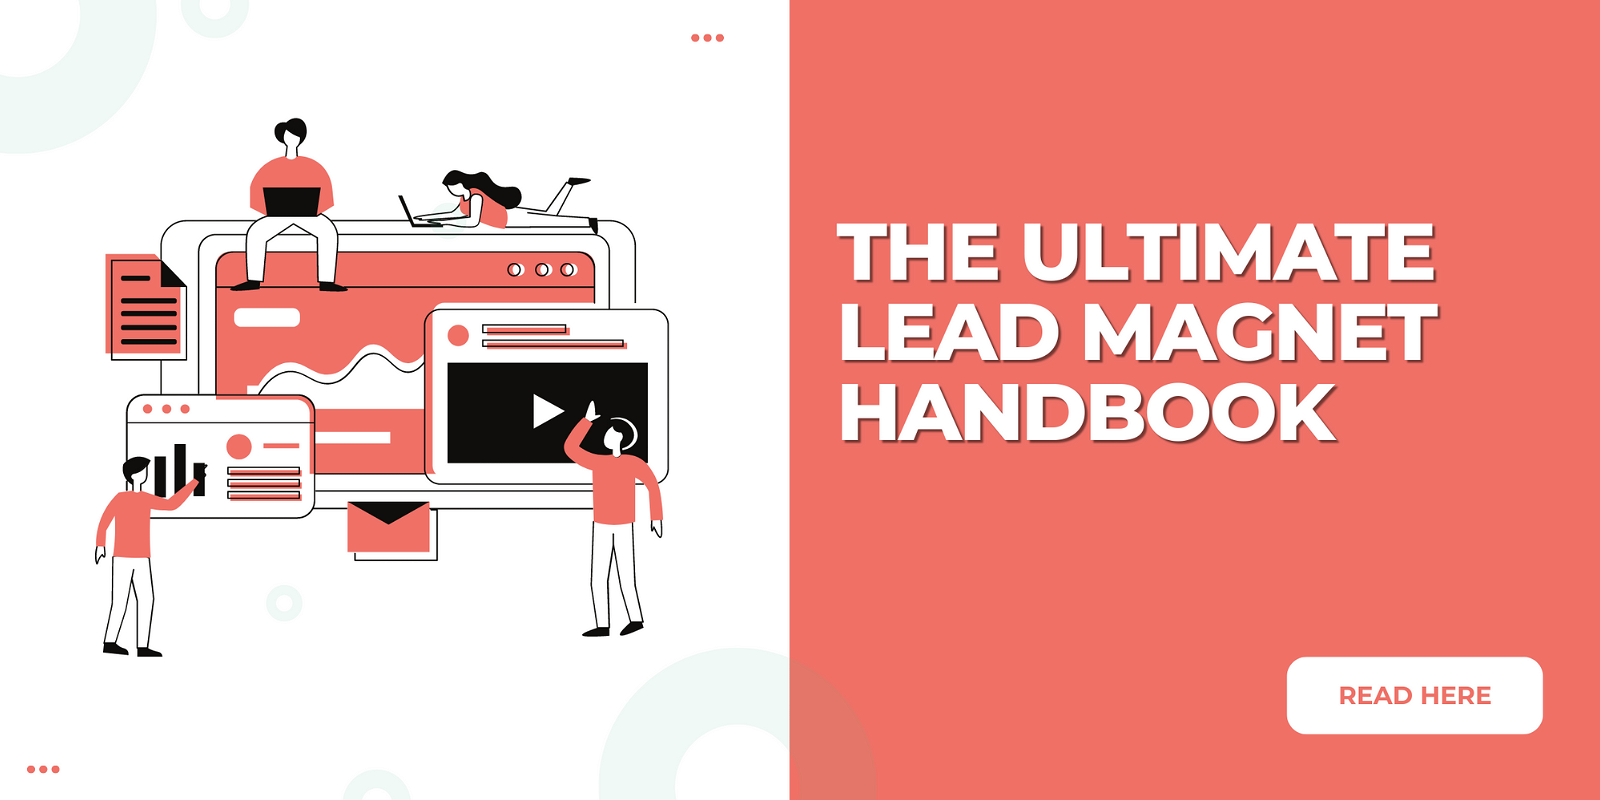 The Ultimate Lead Magnet Handbook